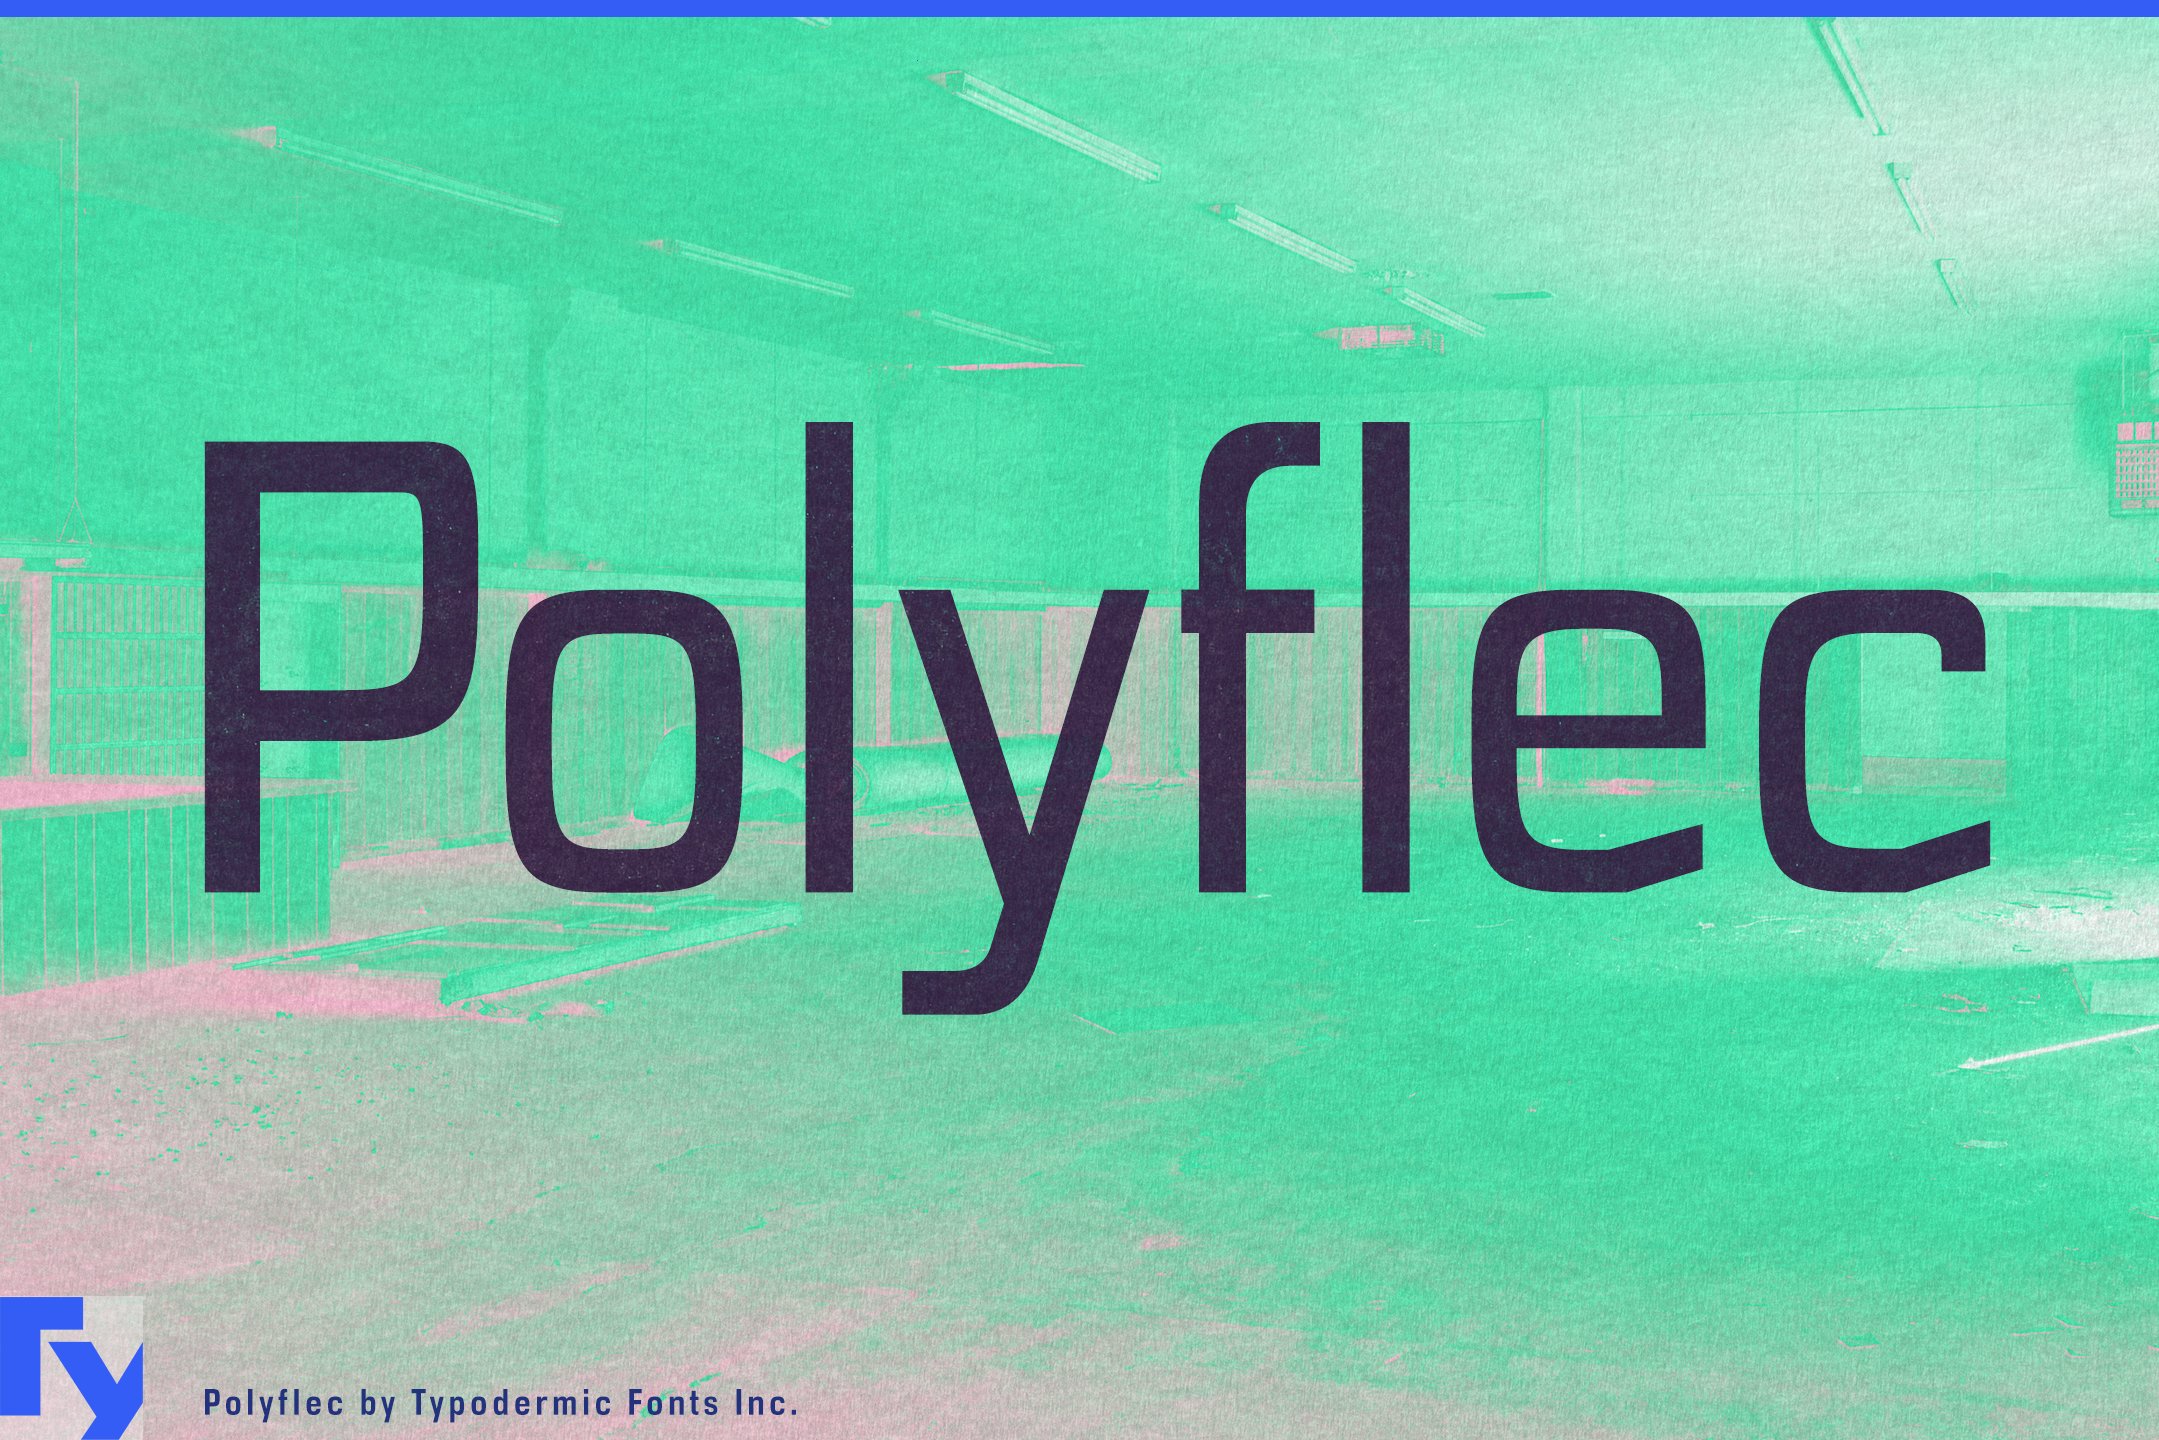 Polyflec cover image.